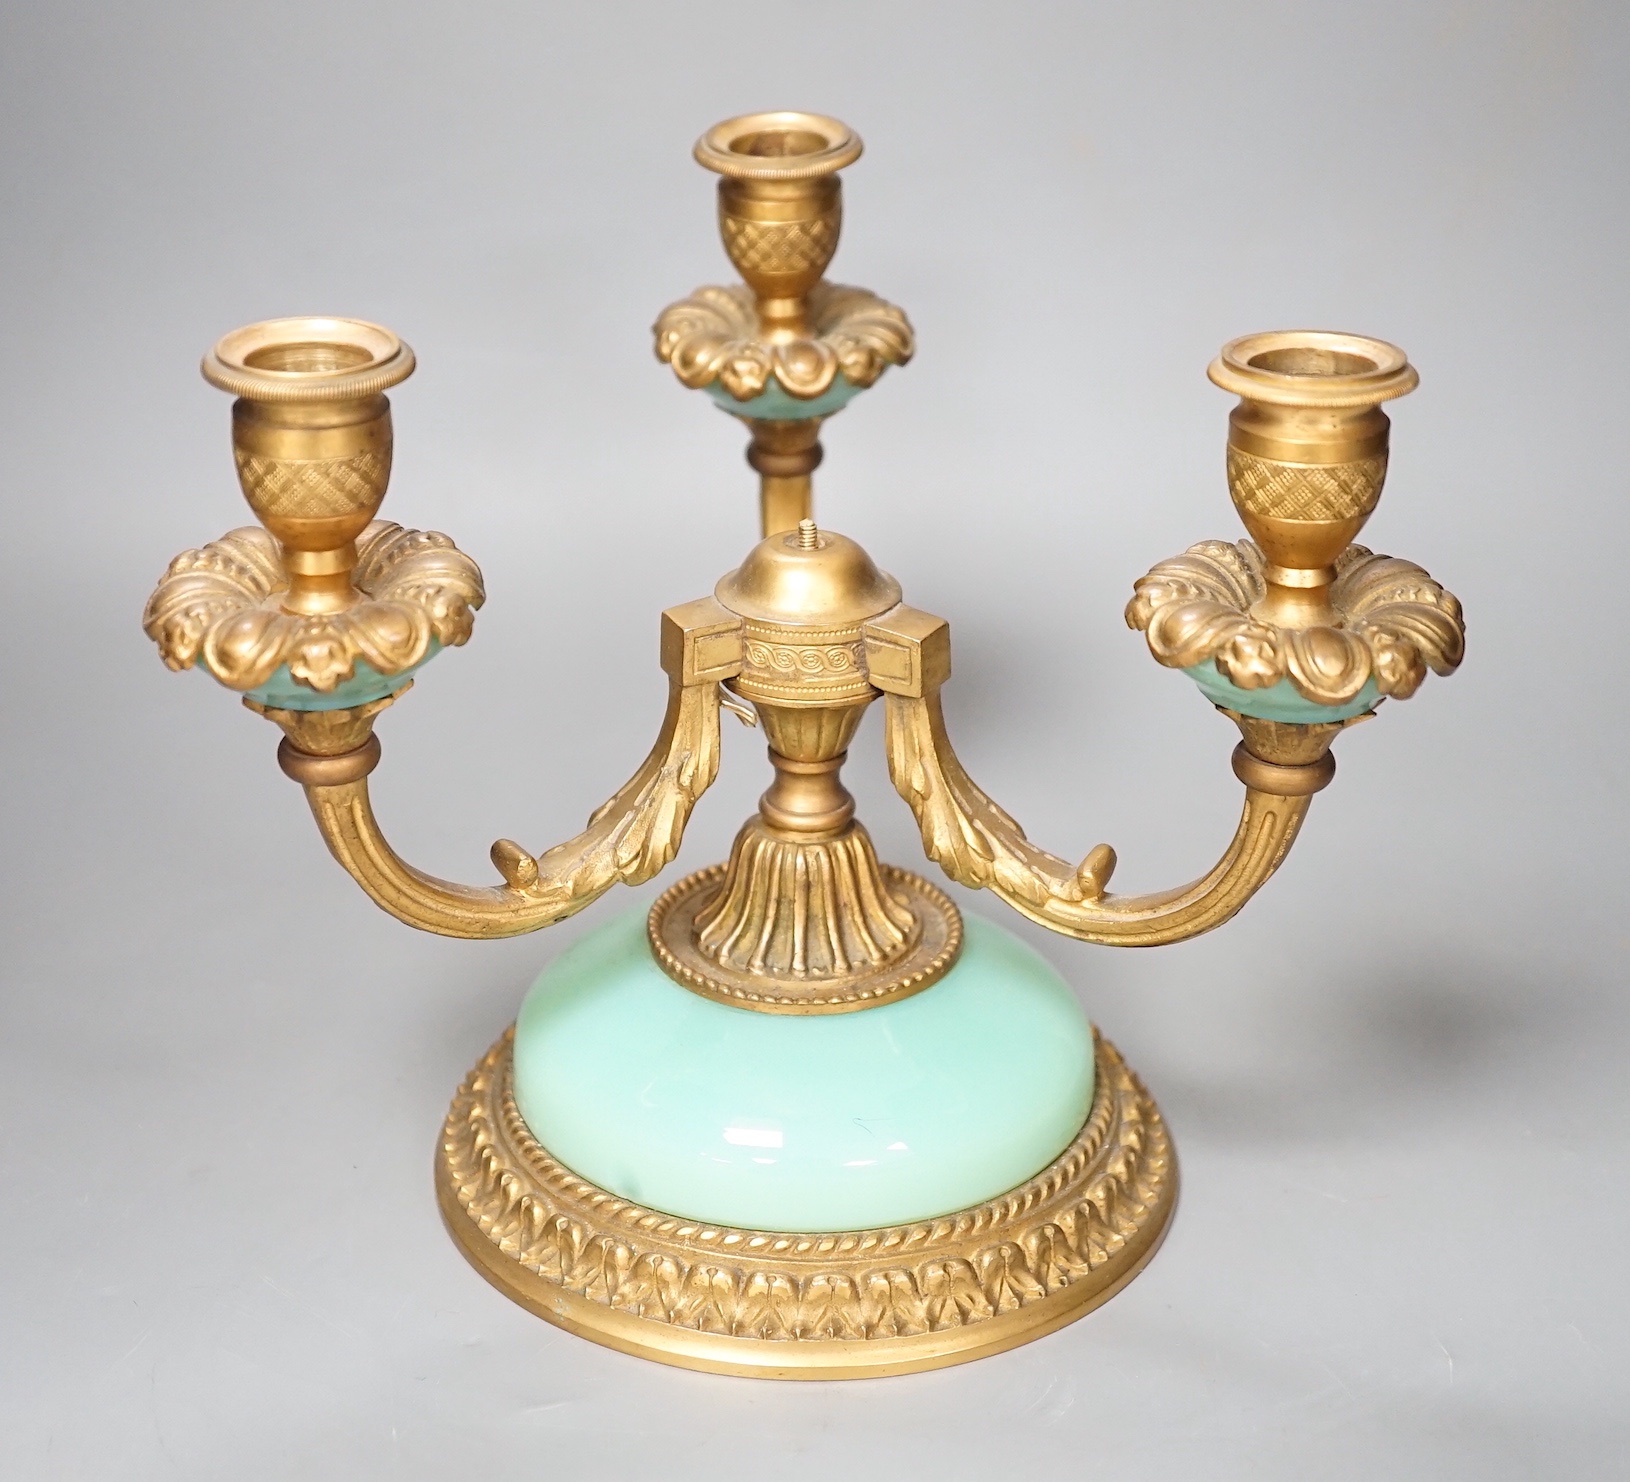 A three branch porcelain and ormolu mounted candelabrum, 19.5cm high